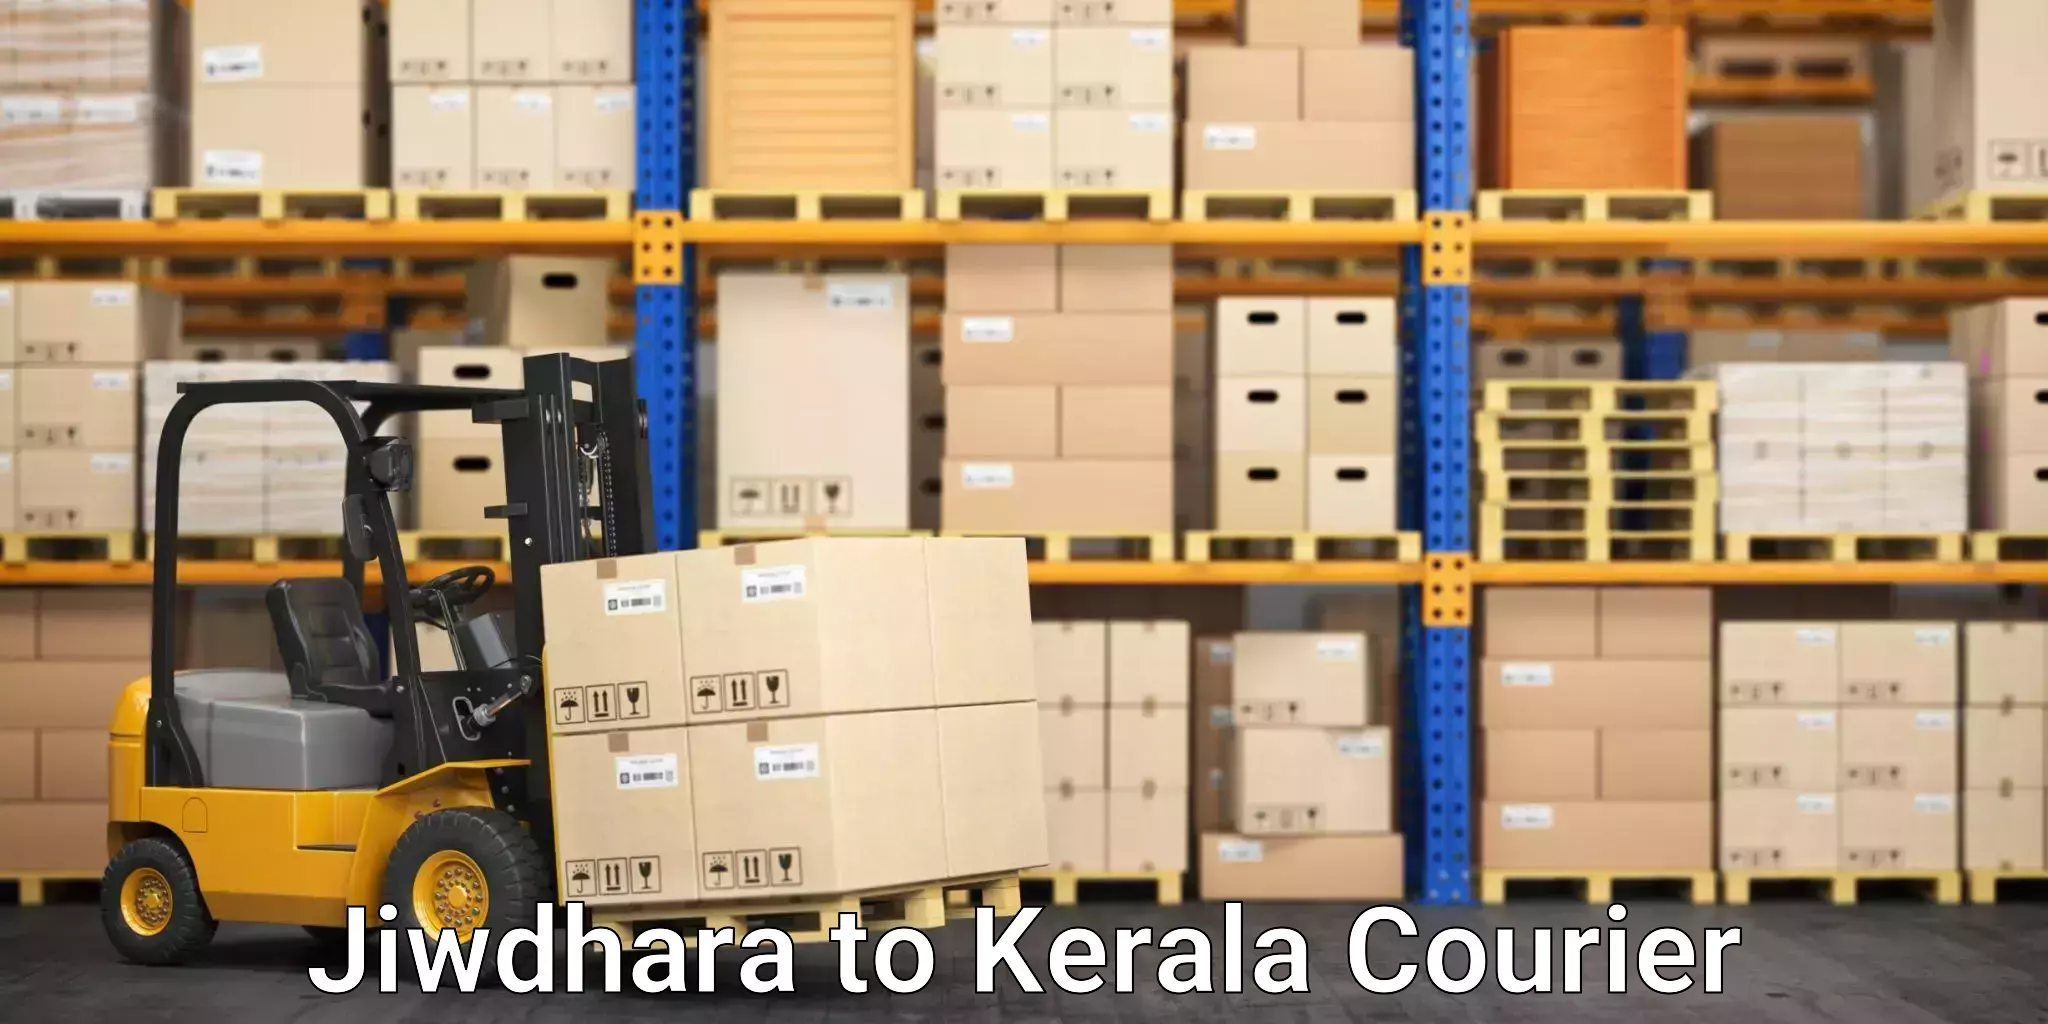 Reliable moving assistance Jiwdhara to Kerala